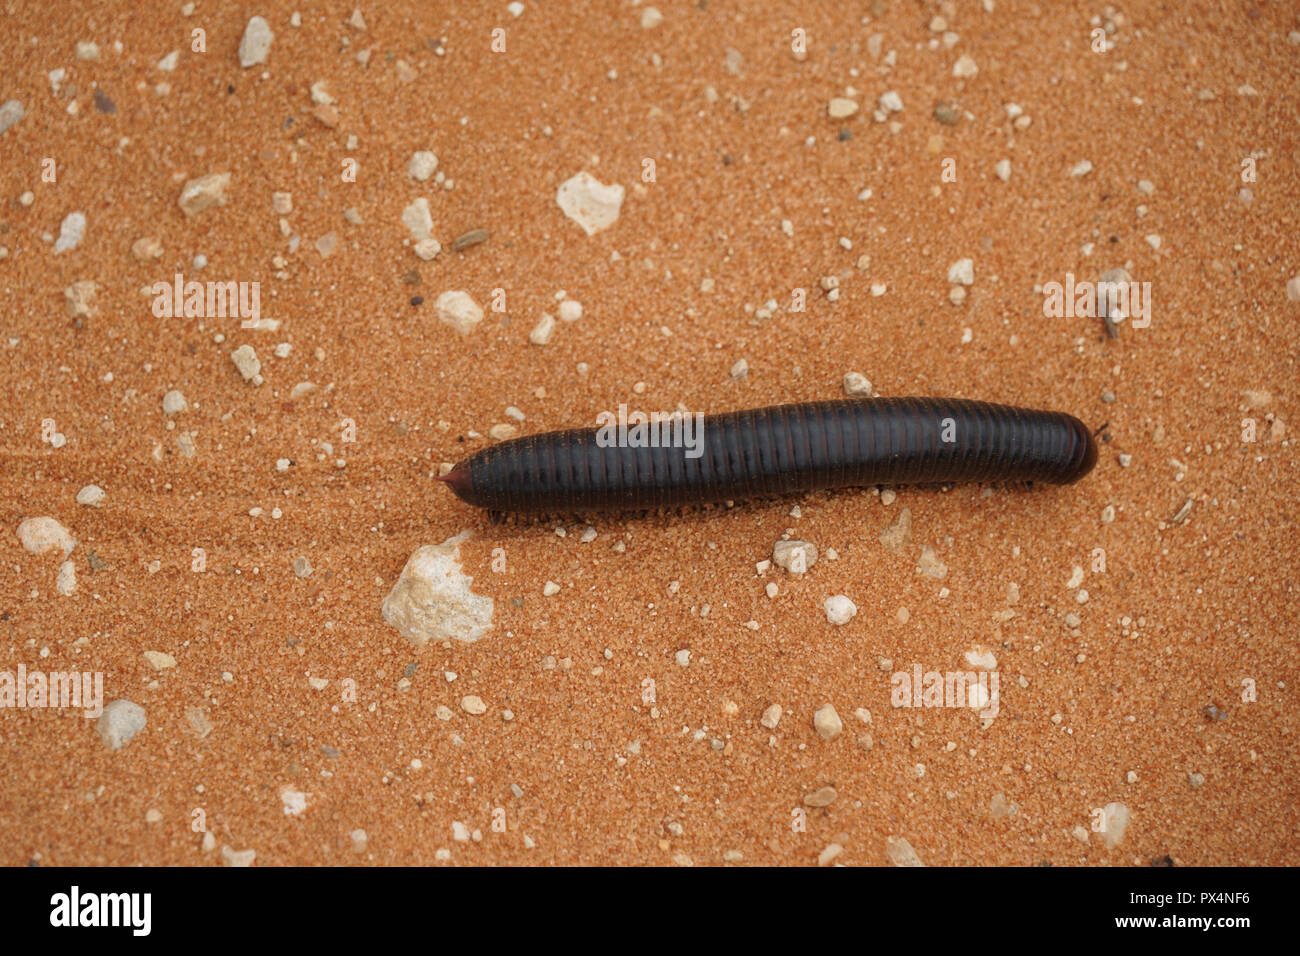 Doppelfüßer (Diplopoda), Tausenfüßer, Namibia, Afrika Foto Stock